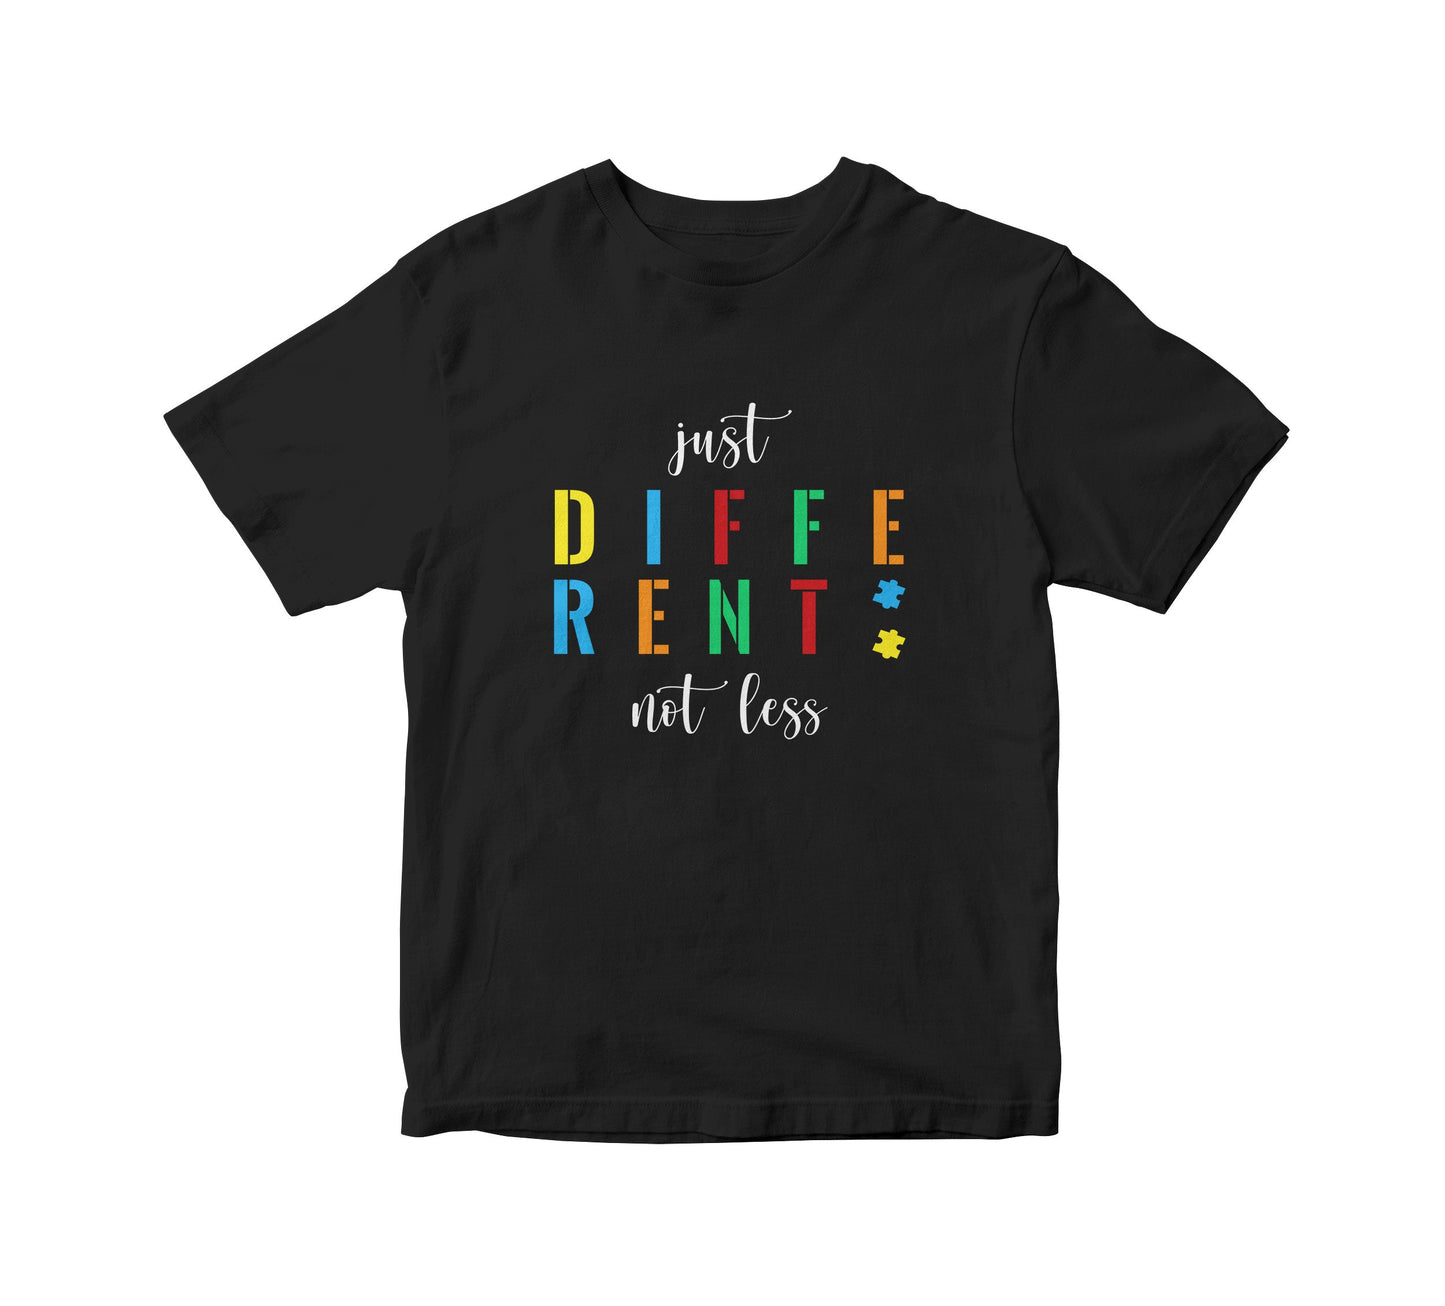 Just Different, Not Less Autism Kids Unisex T-Shirt